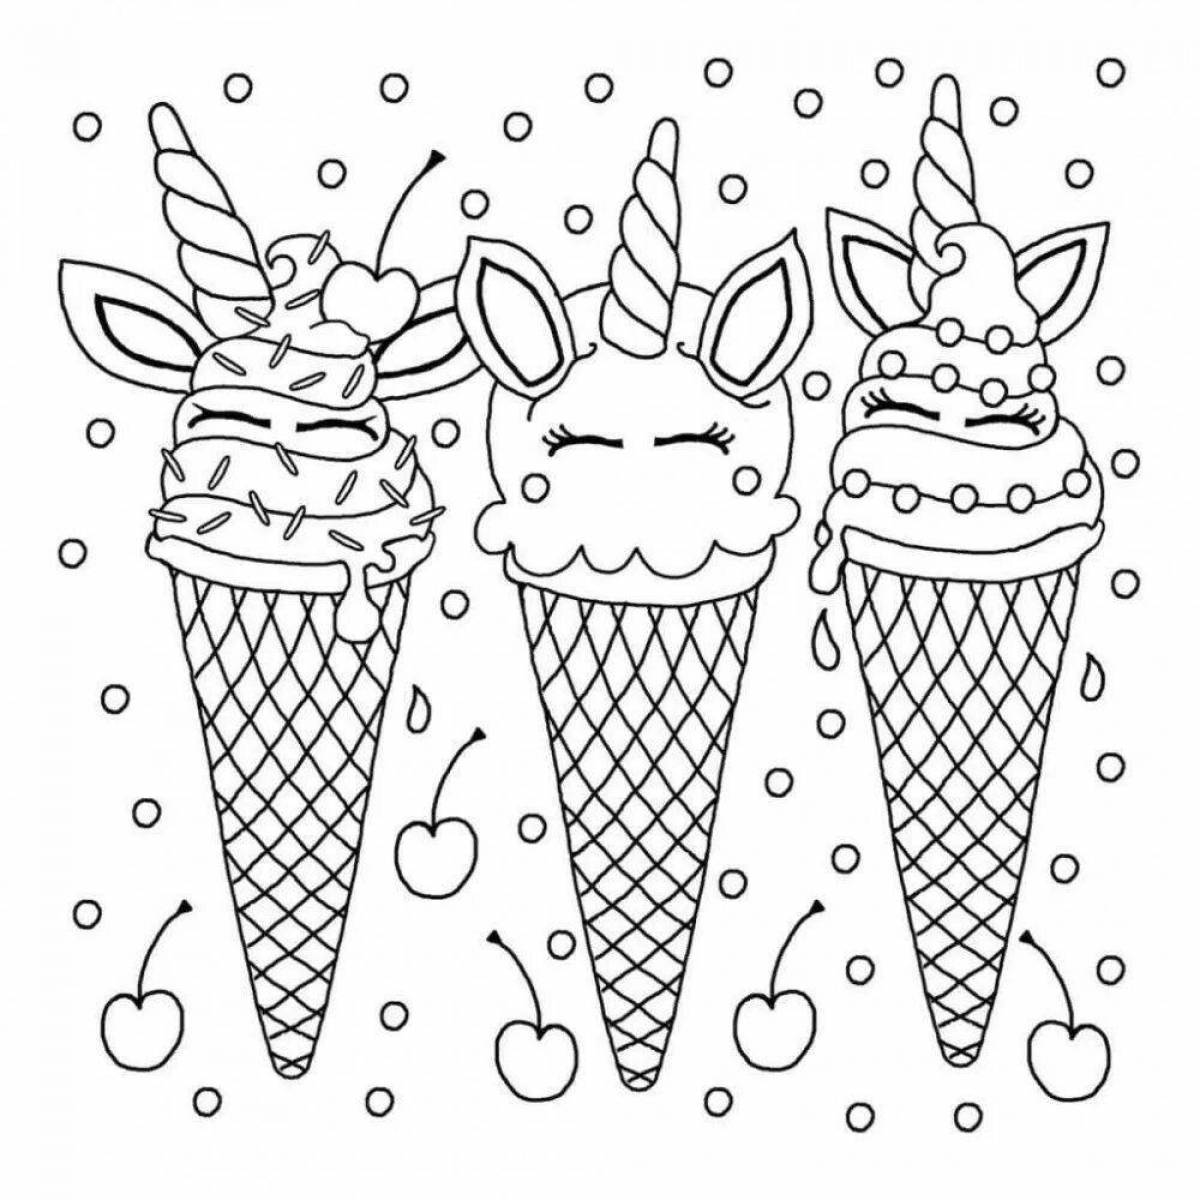 Cute ice cream drawing